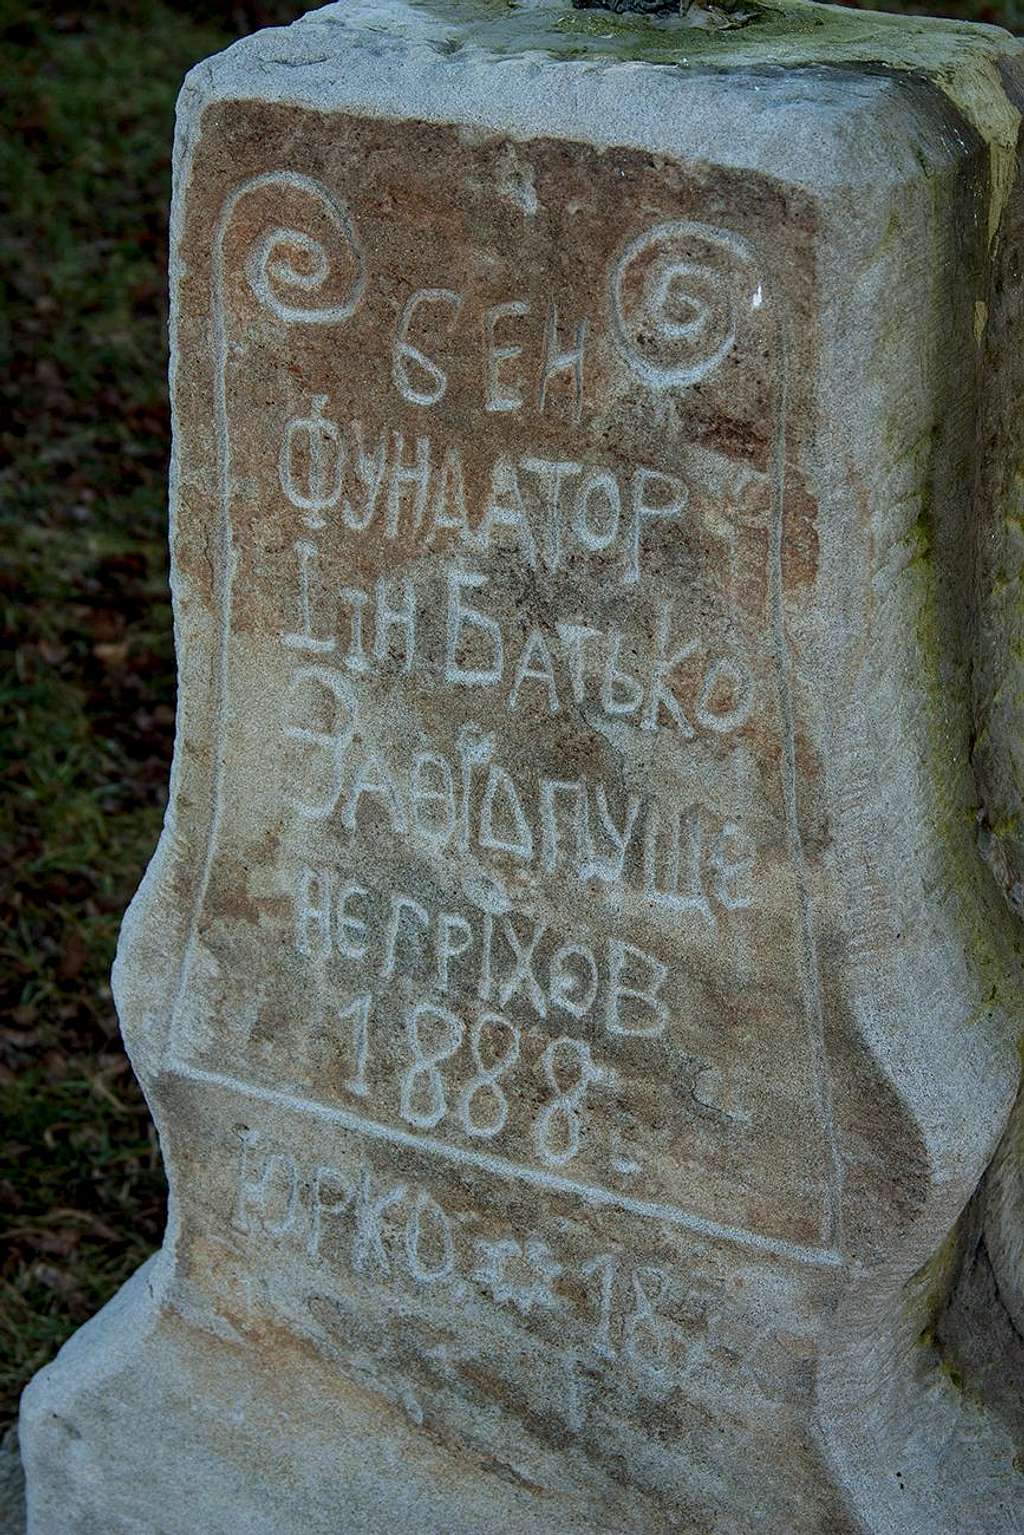 Boyko gravestone in Beniowa